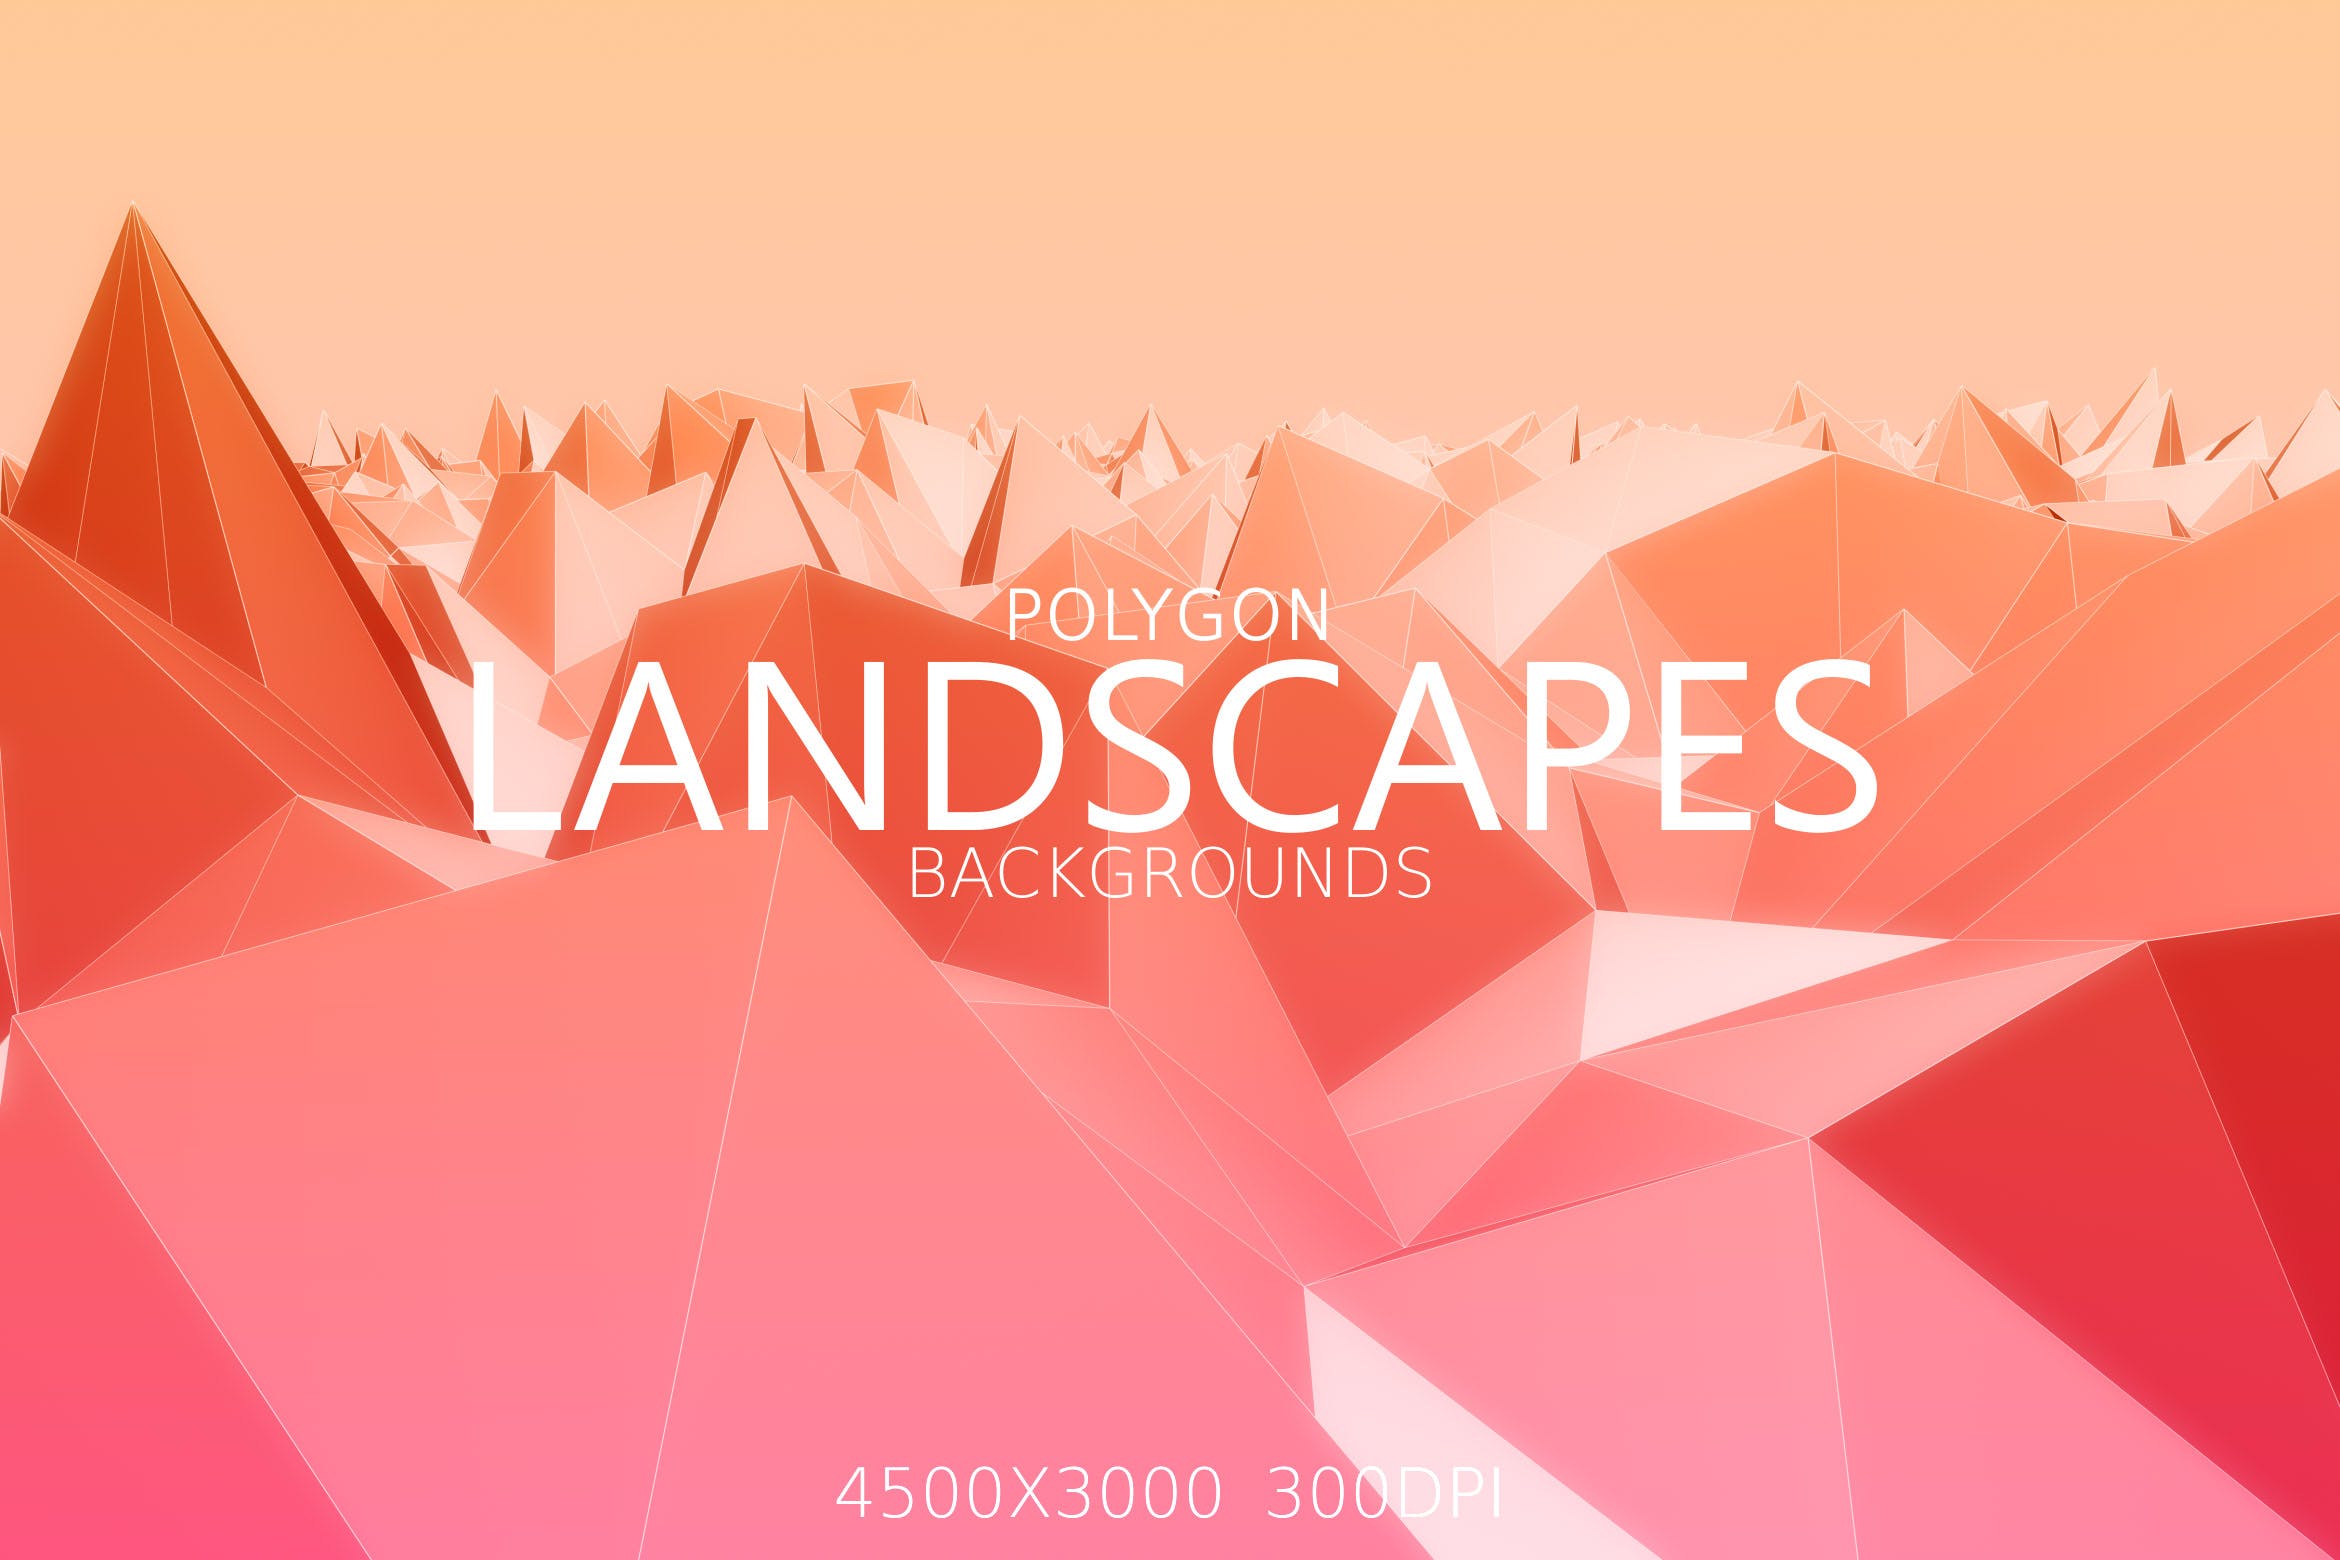 抽象立体多边形背景素材 Polygon Landscapes Background插图